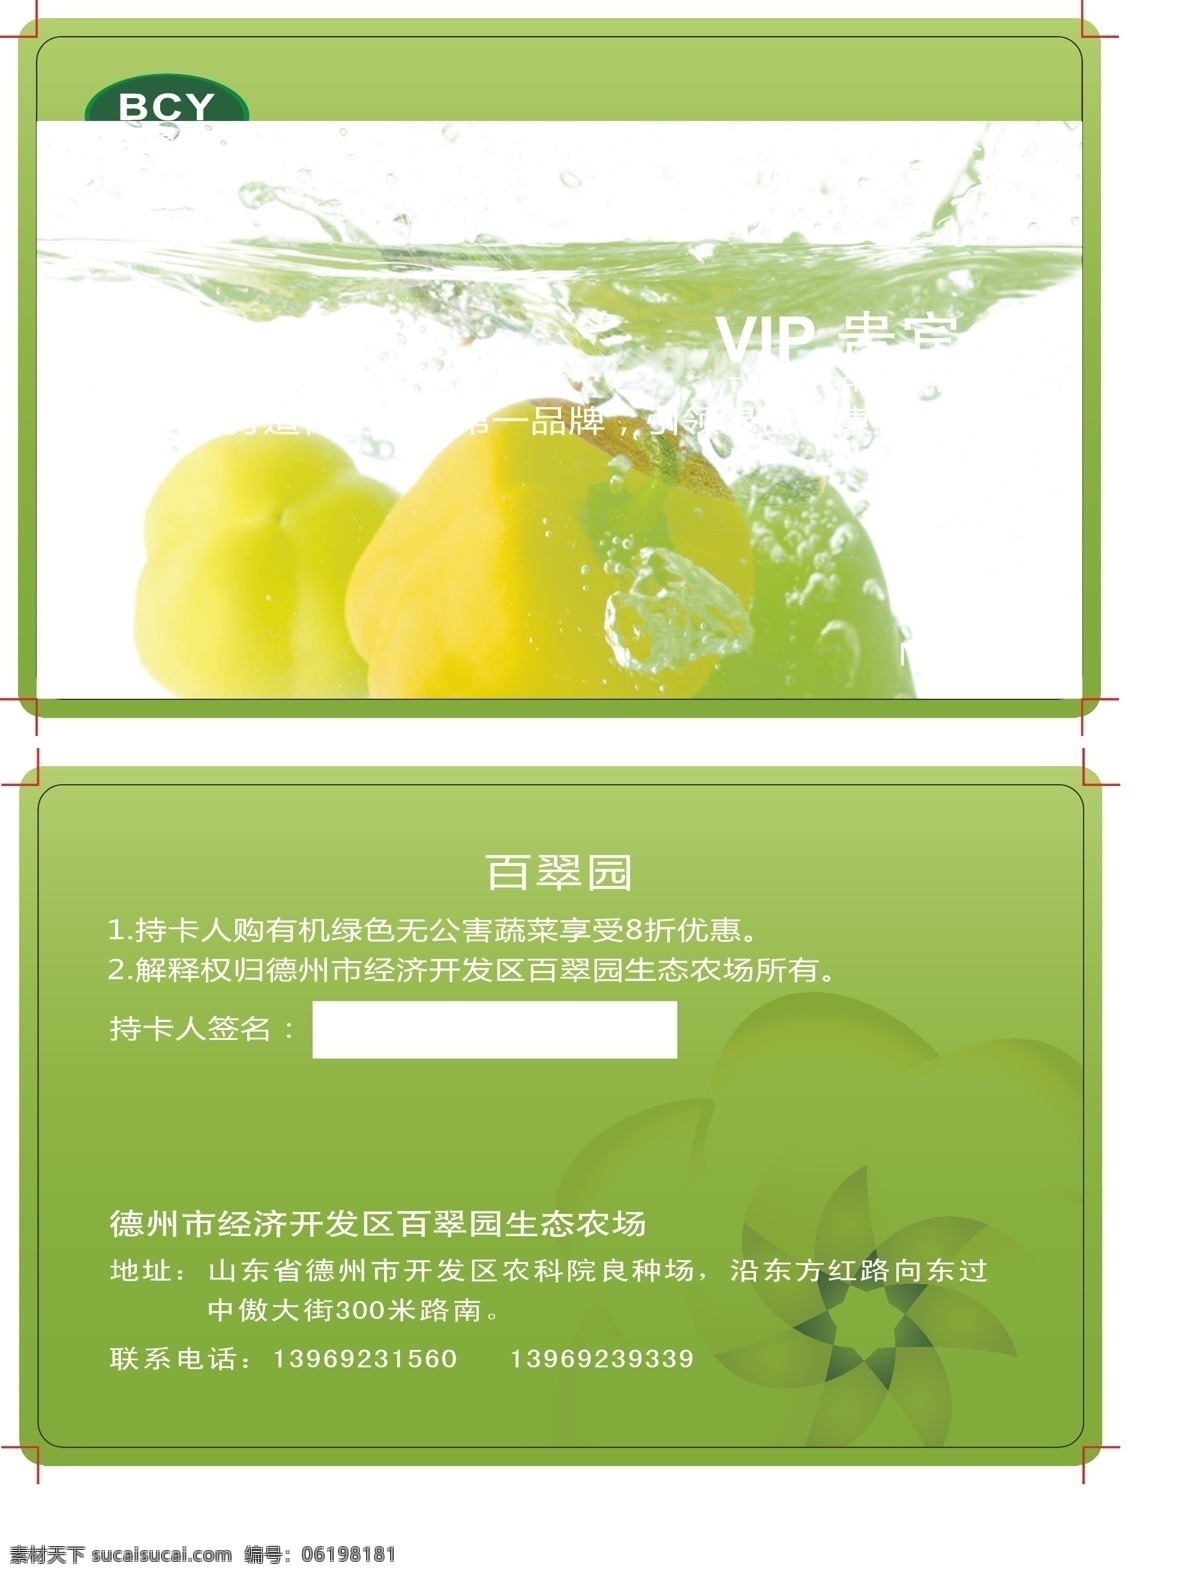 vip卡 贵宾卡 会员卡 名片卡片 蔬菜 水果 vip 卡 矢量 模板下载 蔬菜vip卡 名片卡 广告设计名片